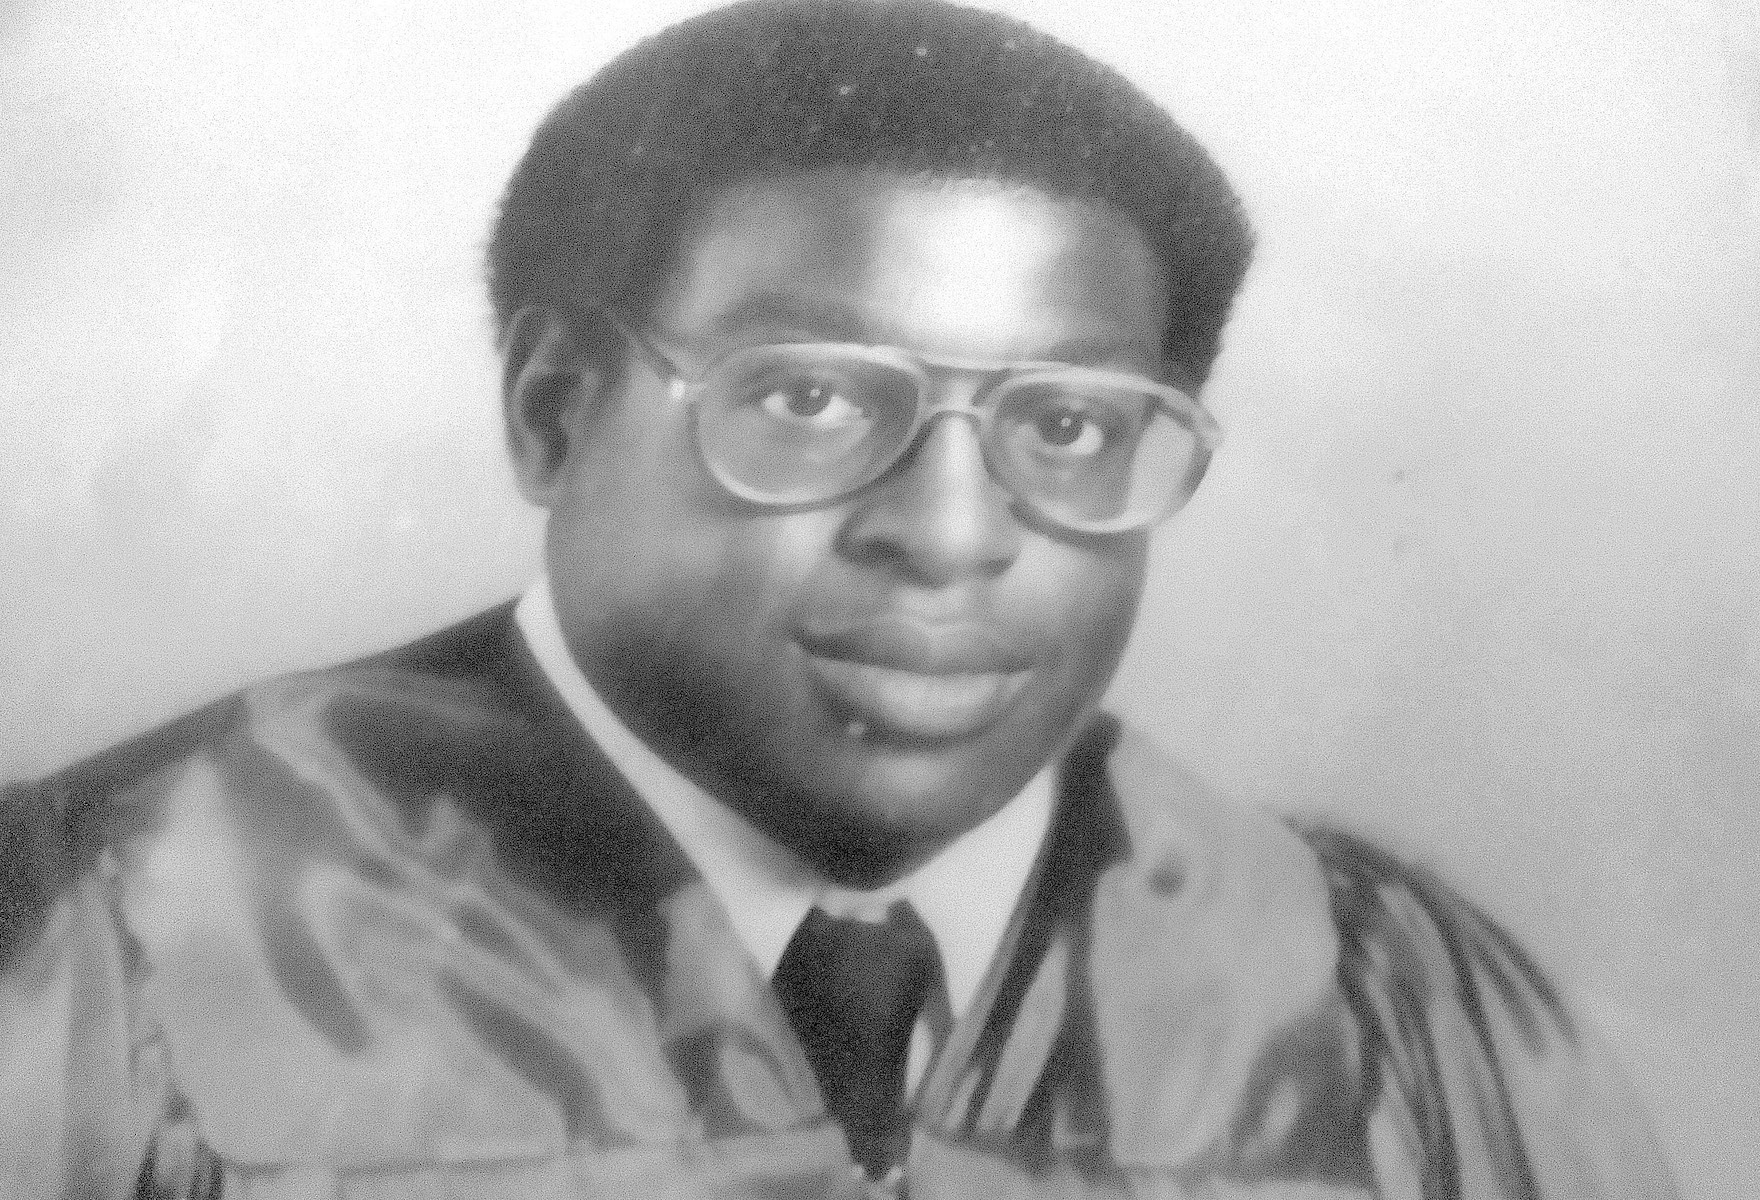 Robert’s graduation at 19 years old, 1982. Photo courtesy of Robert Arrington.